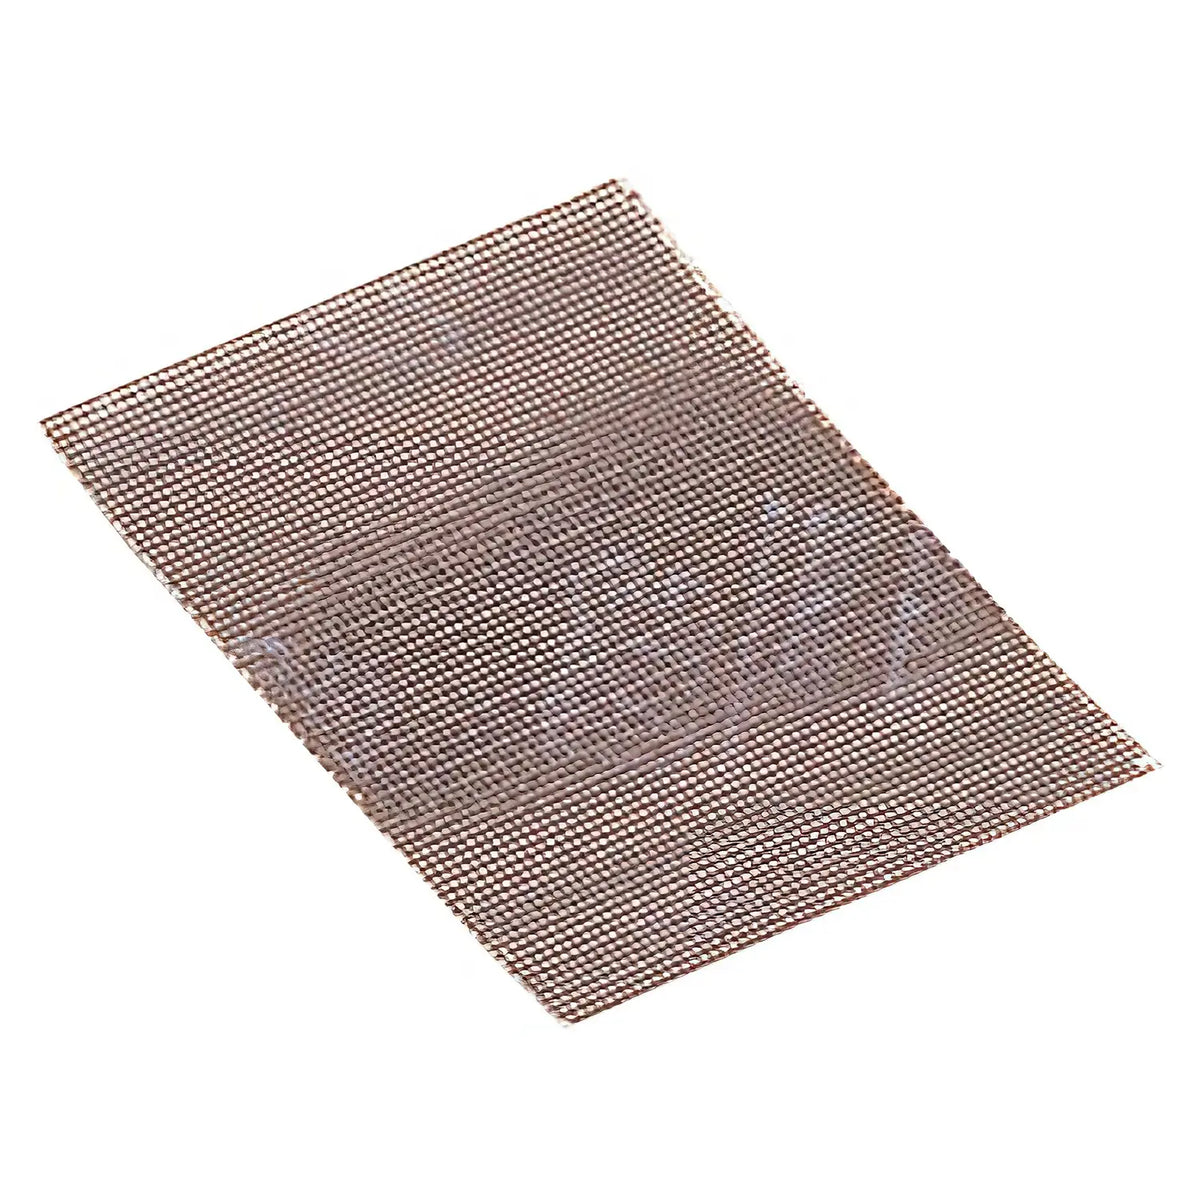 3M Scotch-Brite Polyester Mesh Scrubbing Sheet for Low Temperature